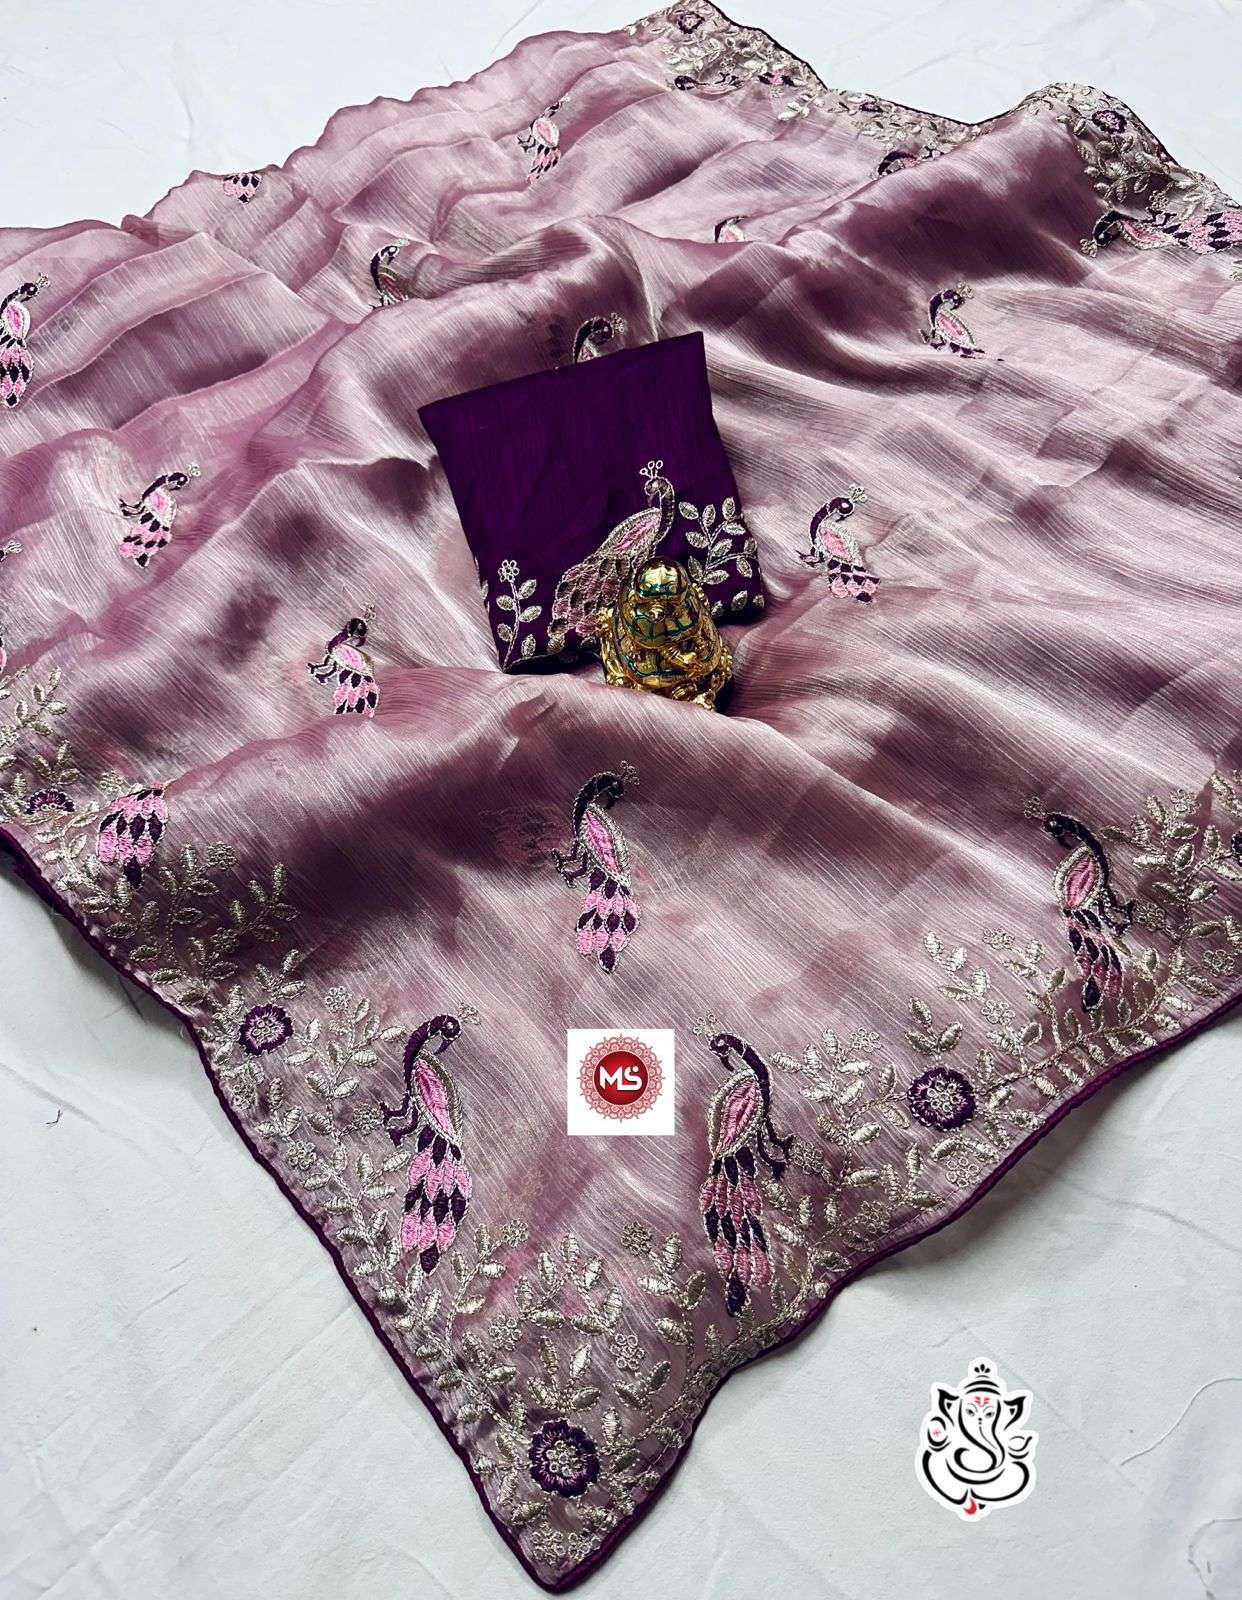 MS BRAND JIMMY CHOO designer jimmy choo fabric fully heavy multi pallu saree